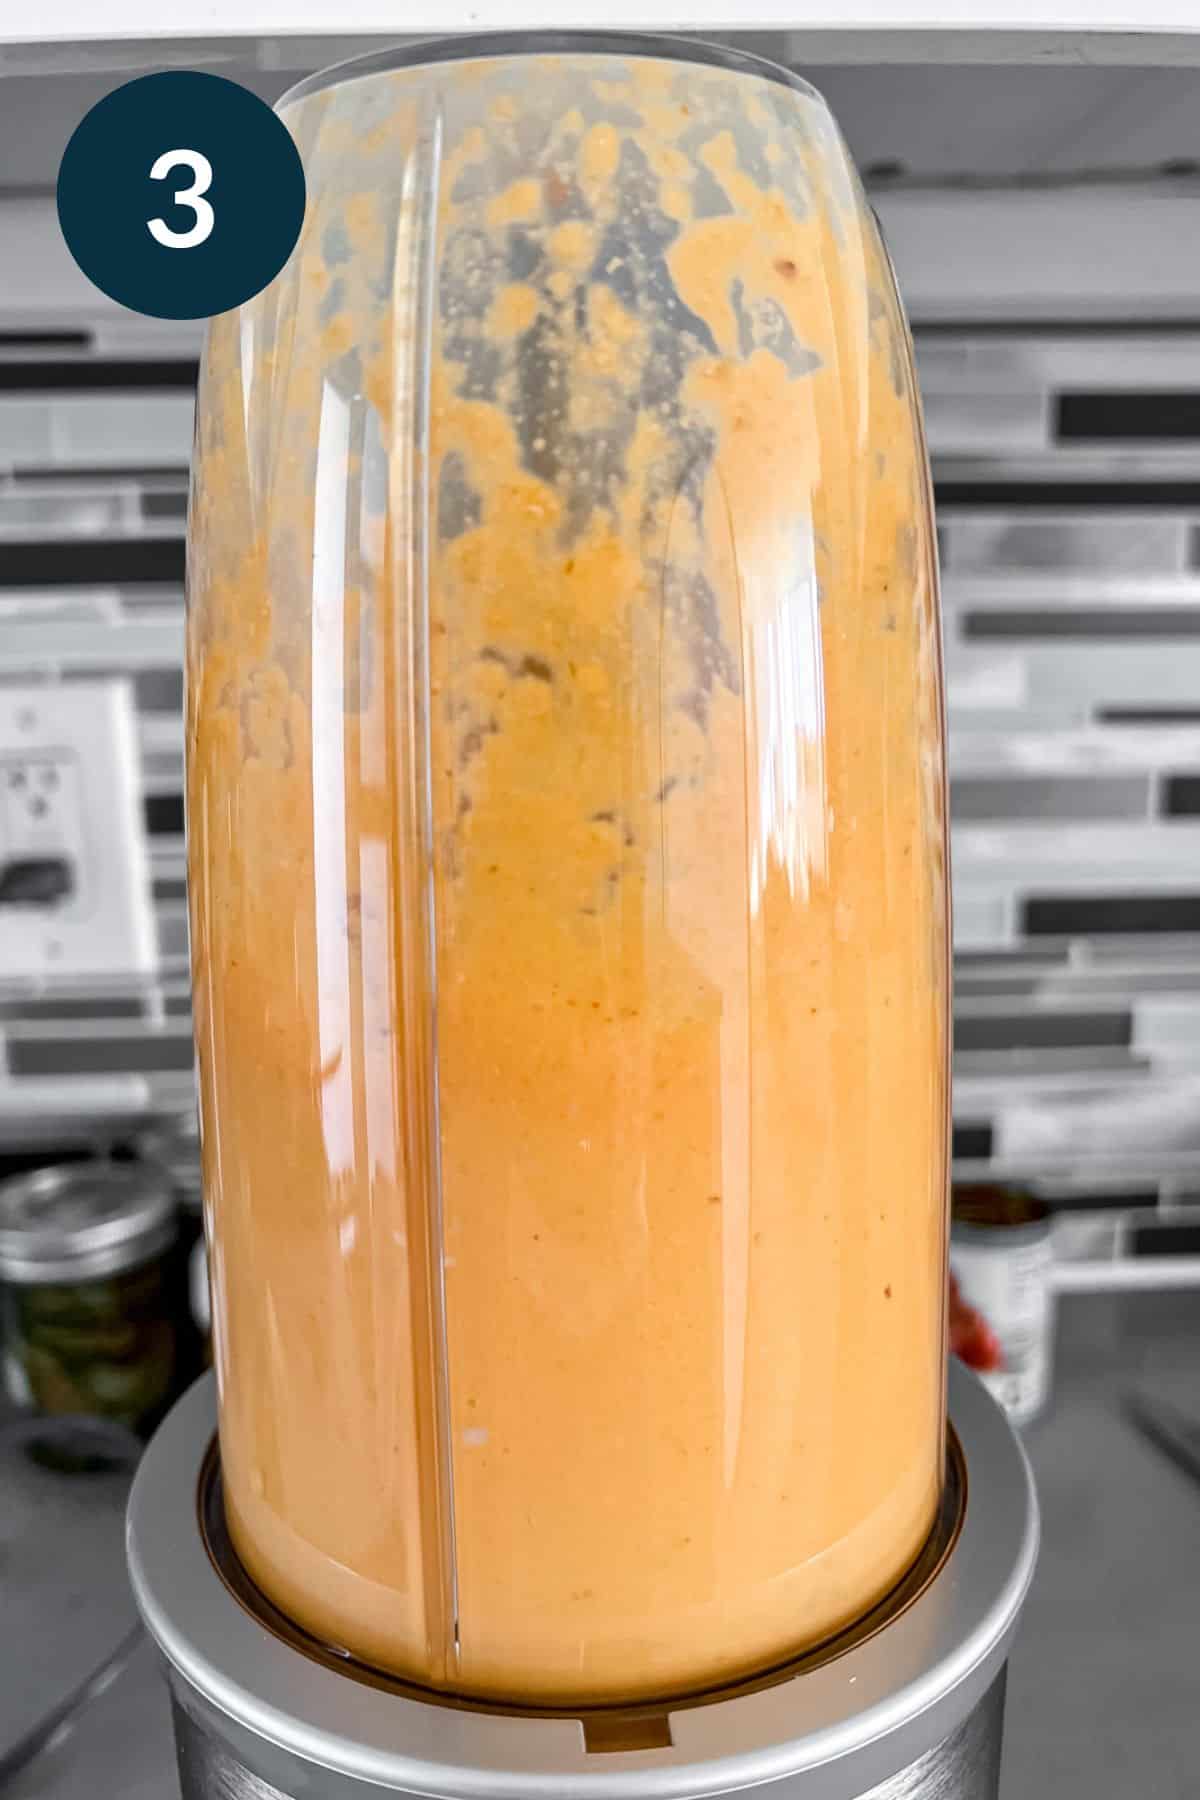 personal blender with smooth orange/yellow cashew cream sauce. 